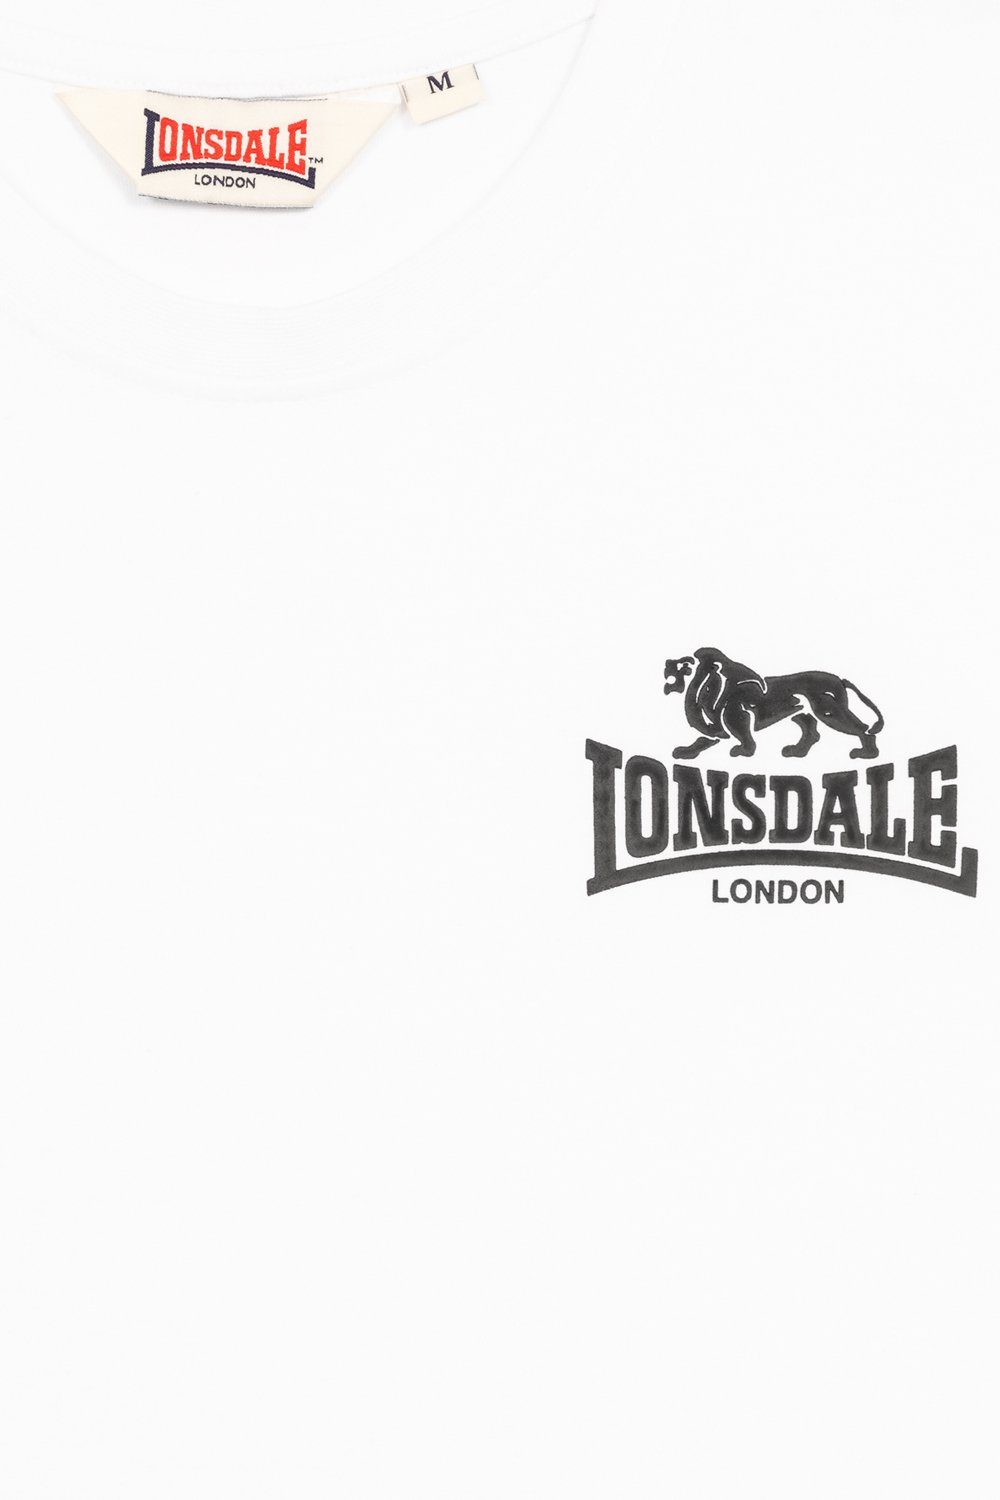 BLAIRMORE Lonsdale Green/White T-Shirt